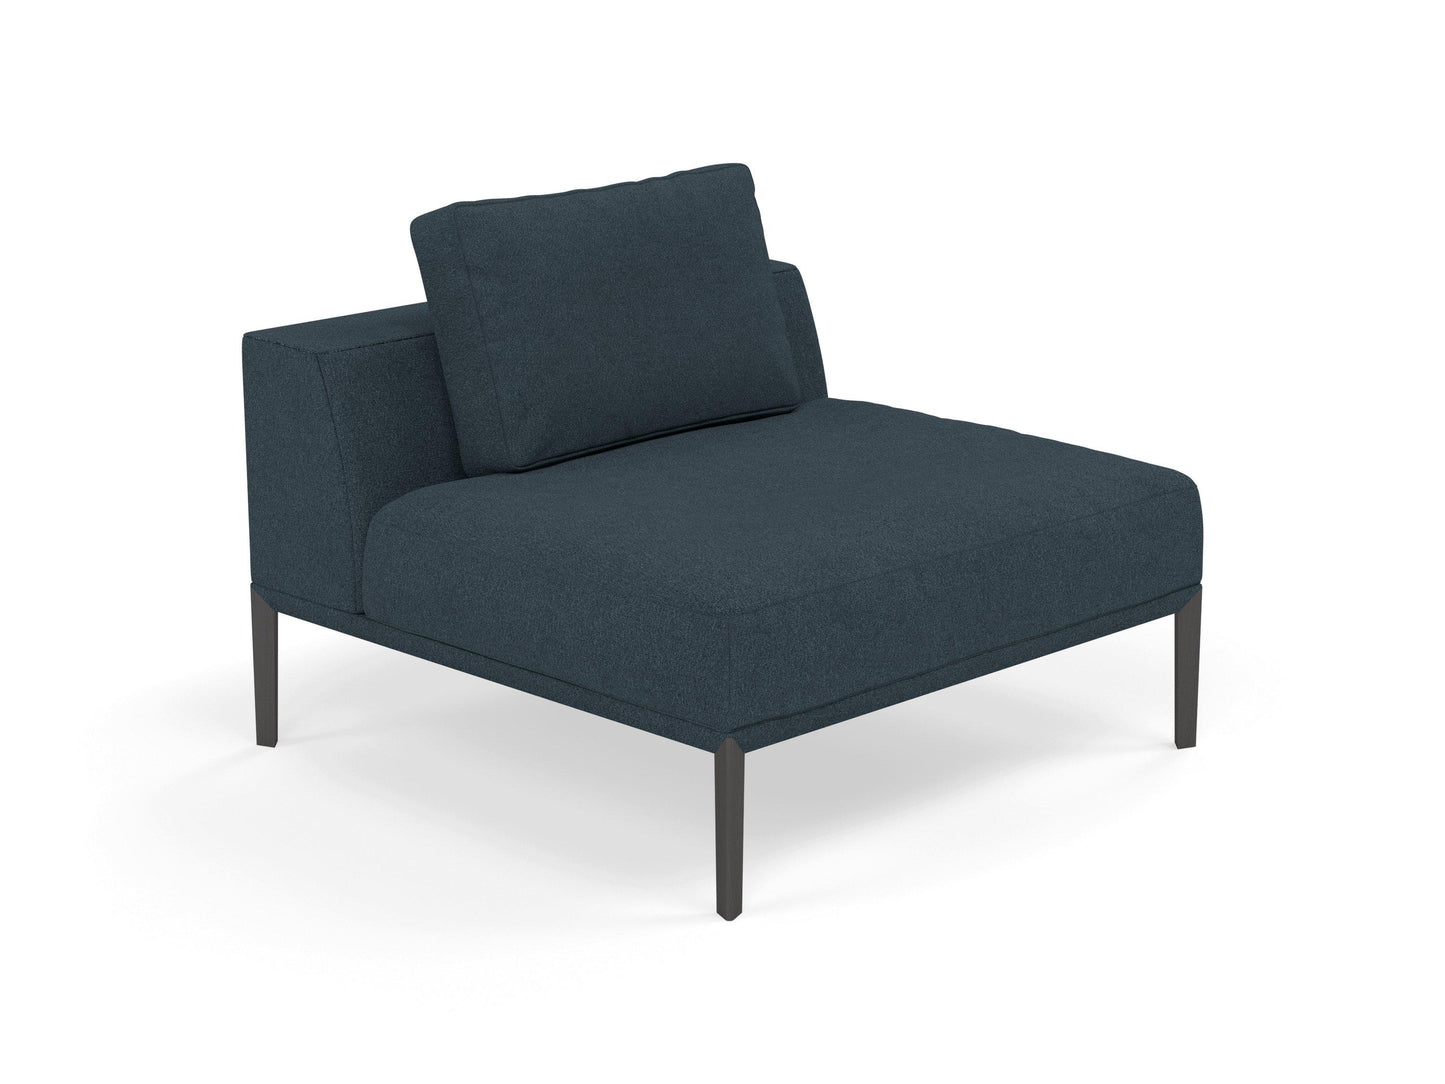 Modern Armchair 1 Seater Sofa without armrests in Denim Blue Fabric-Distinct Designs (London) Ltd